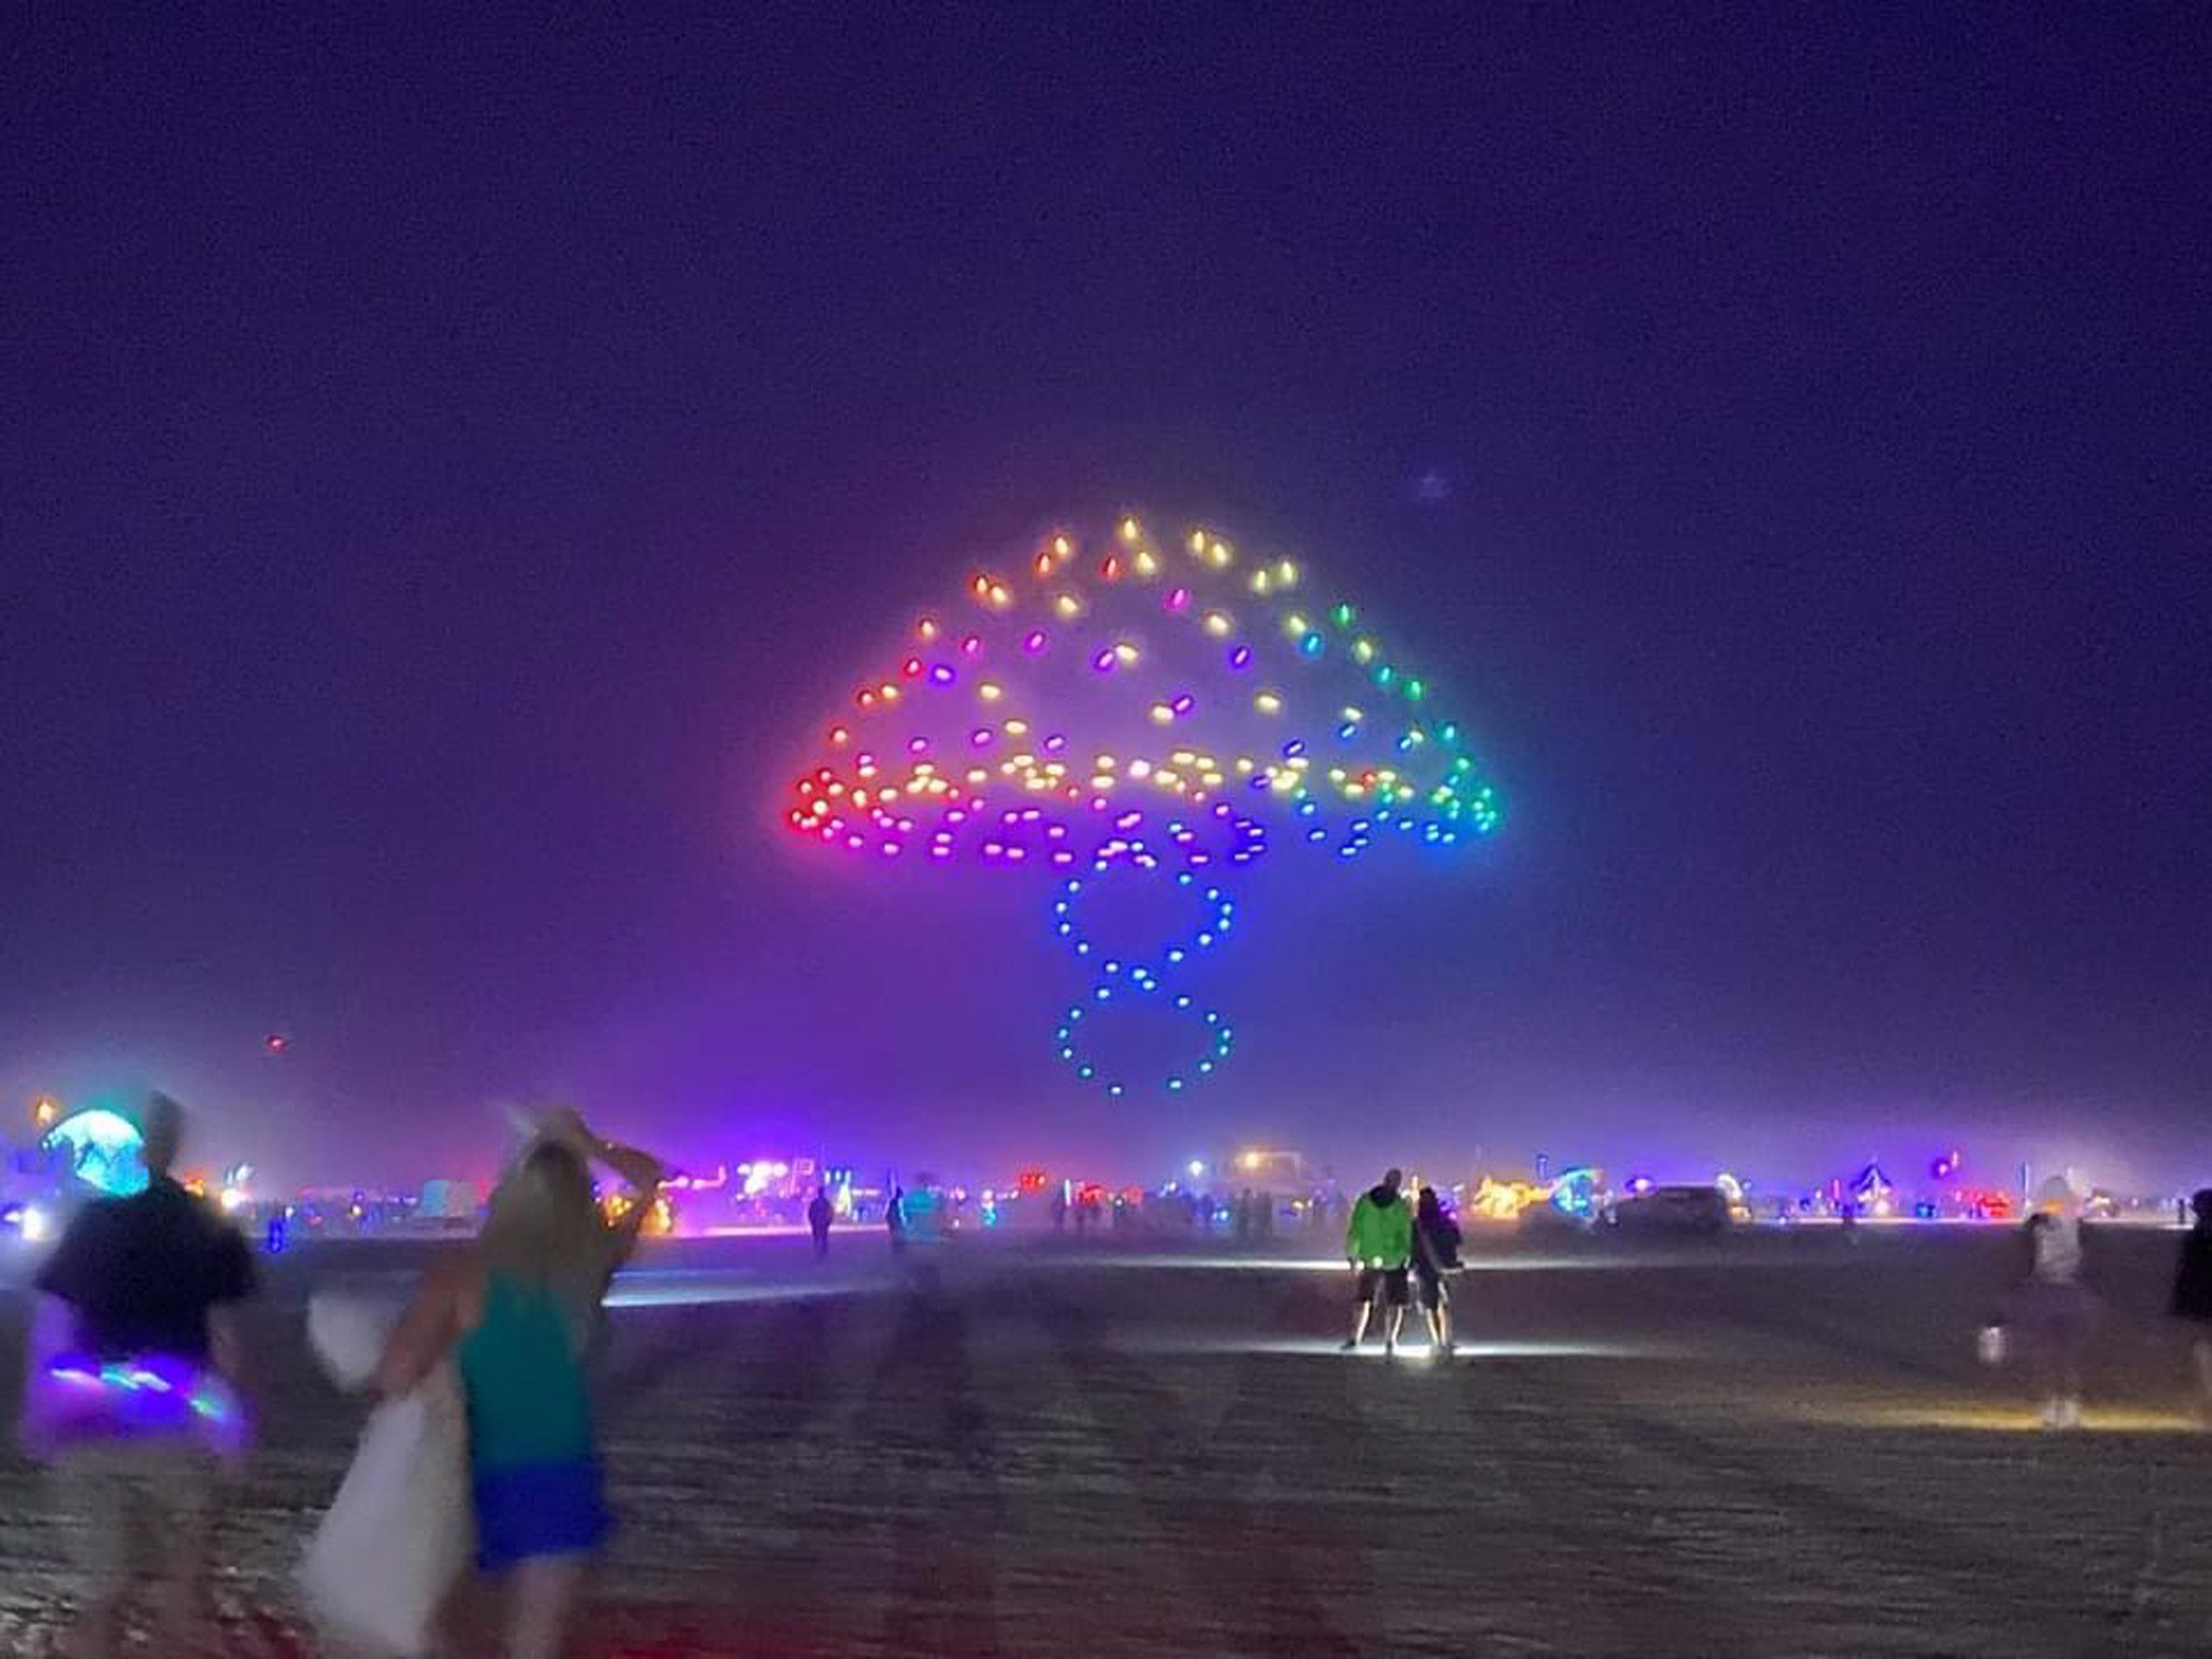 Studio Drift uses drones to create light installation at Burning Man